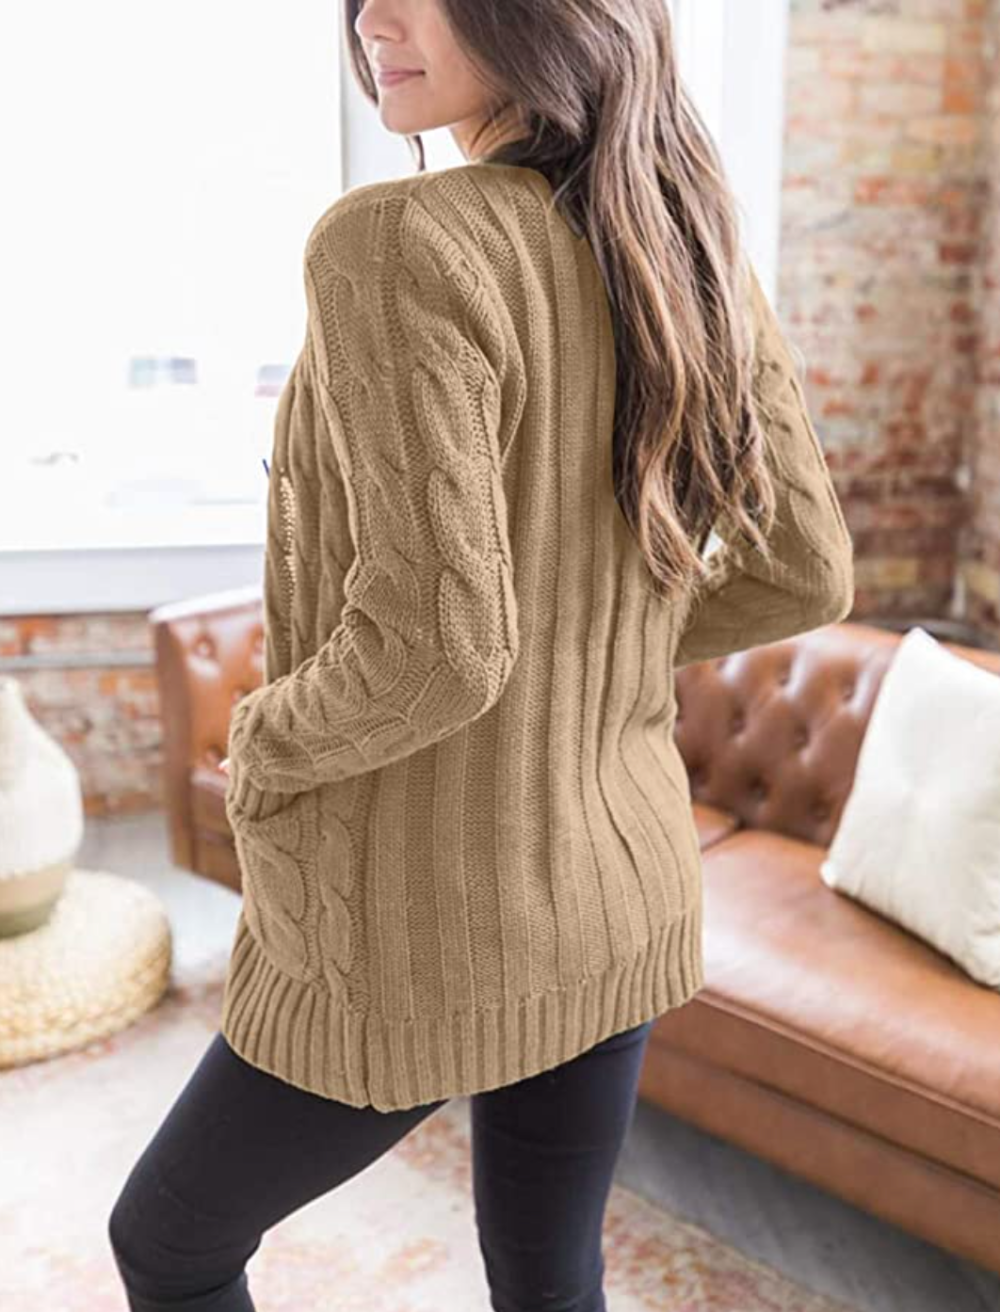 MEROKEETY Women's Long Sleeve Cable Knit Sweater